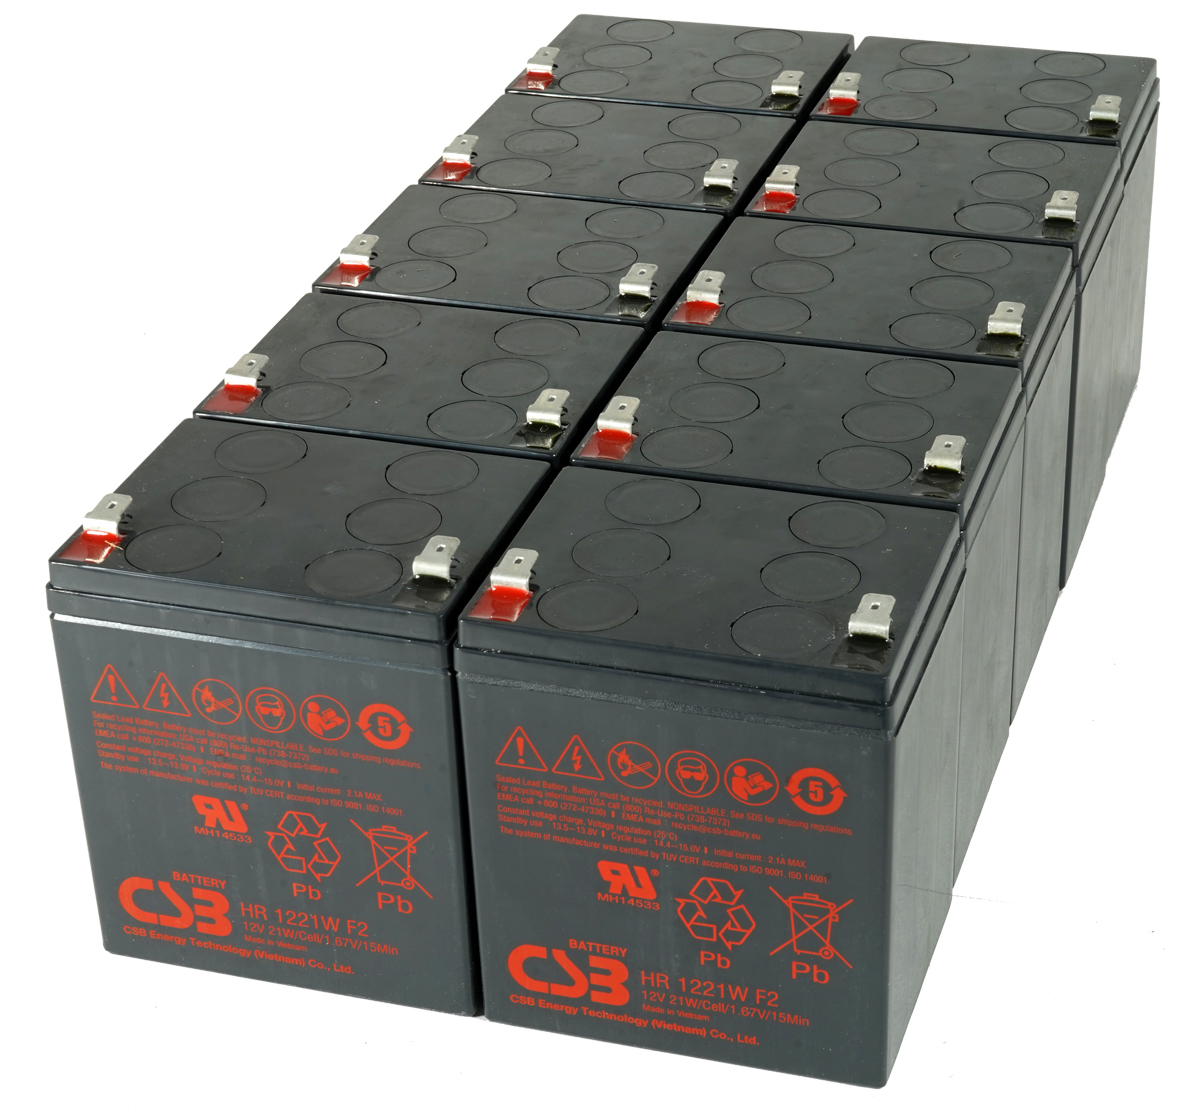 MDS68756 UPS Battery Kit for MGE / Eaton UPS